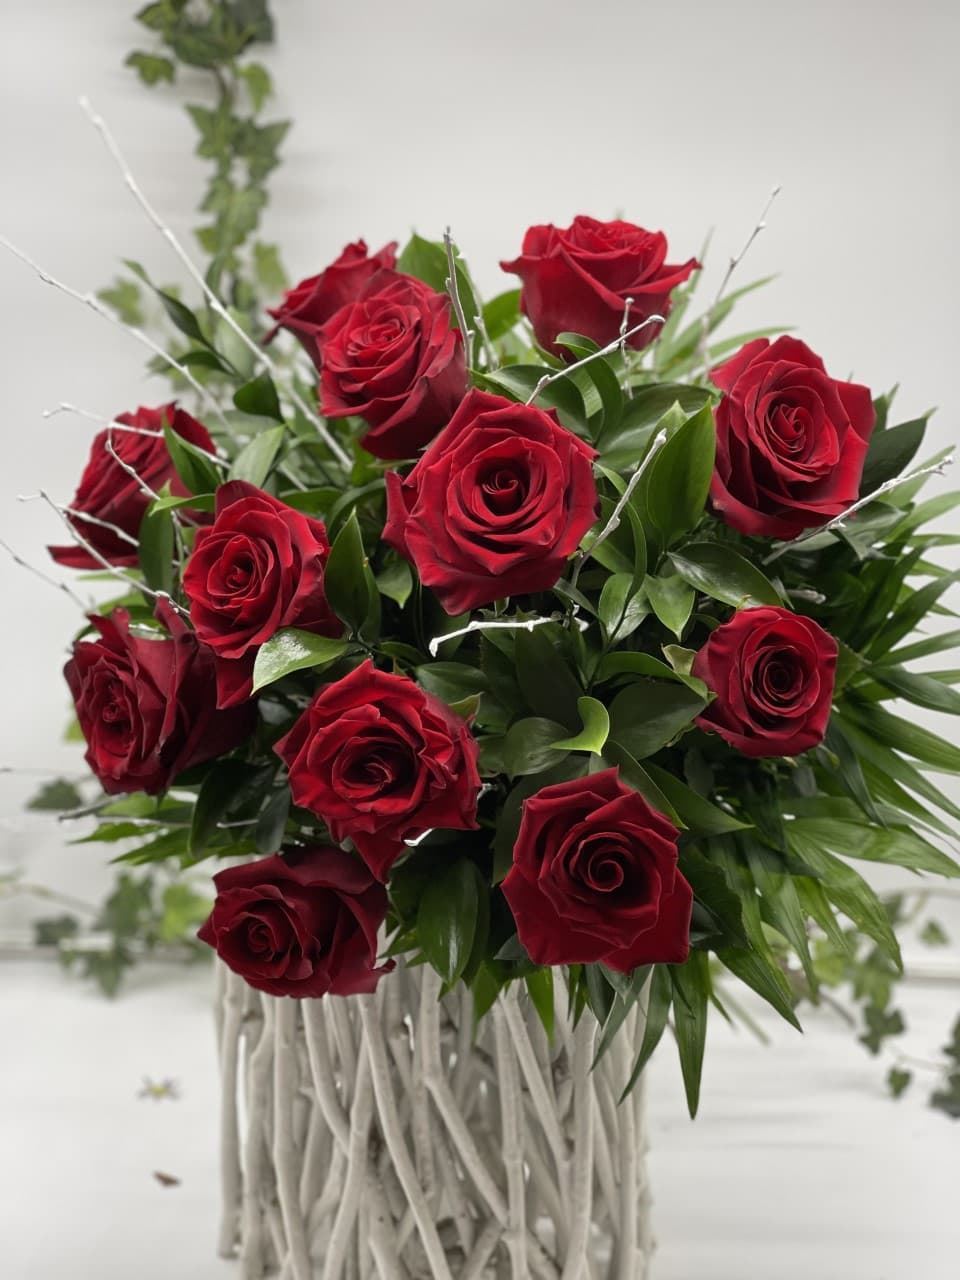 VALENTIN(Ramo de 12 rosas rojas) - Imagen 1